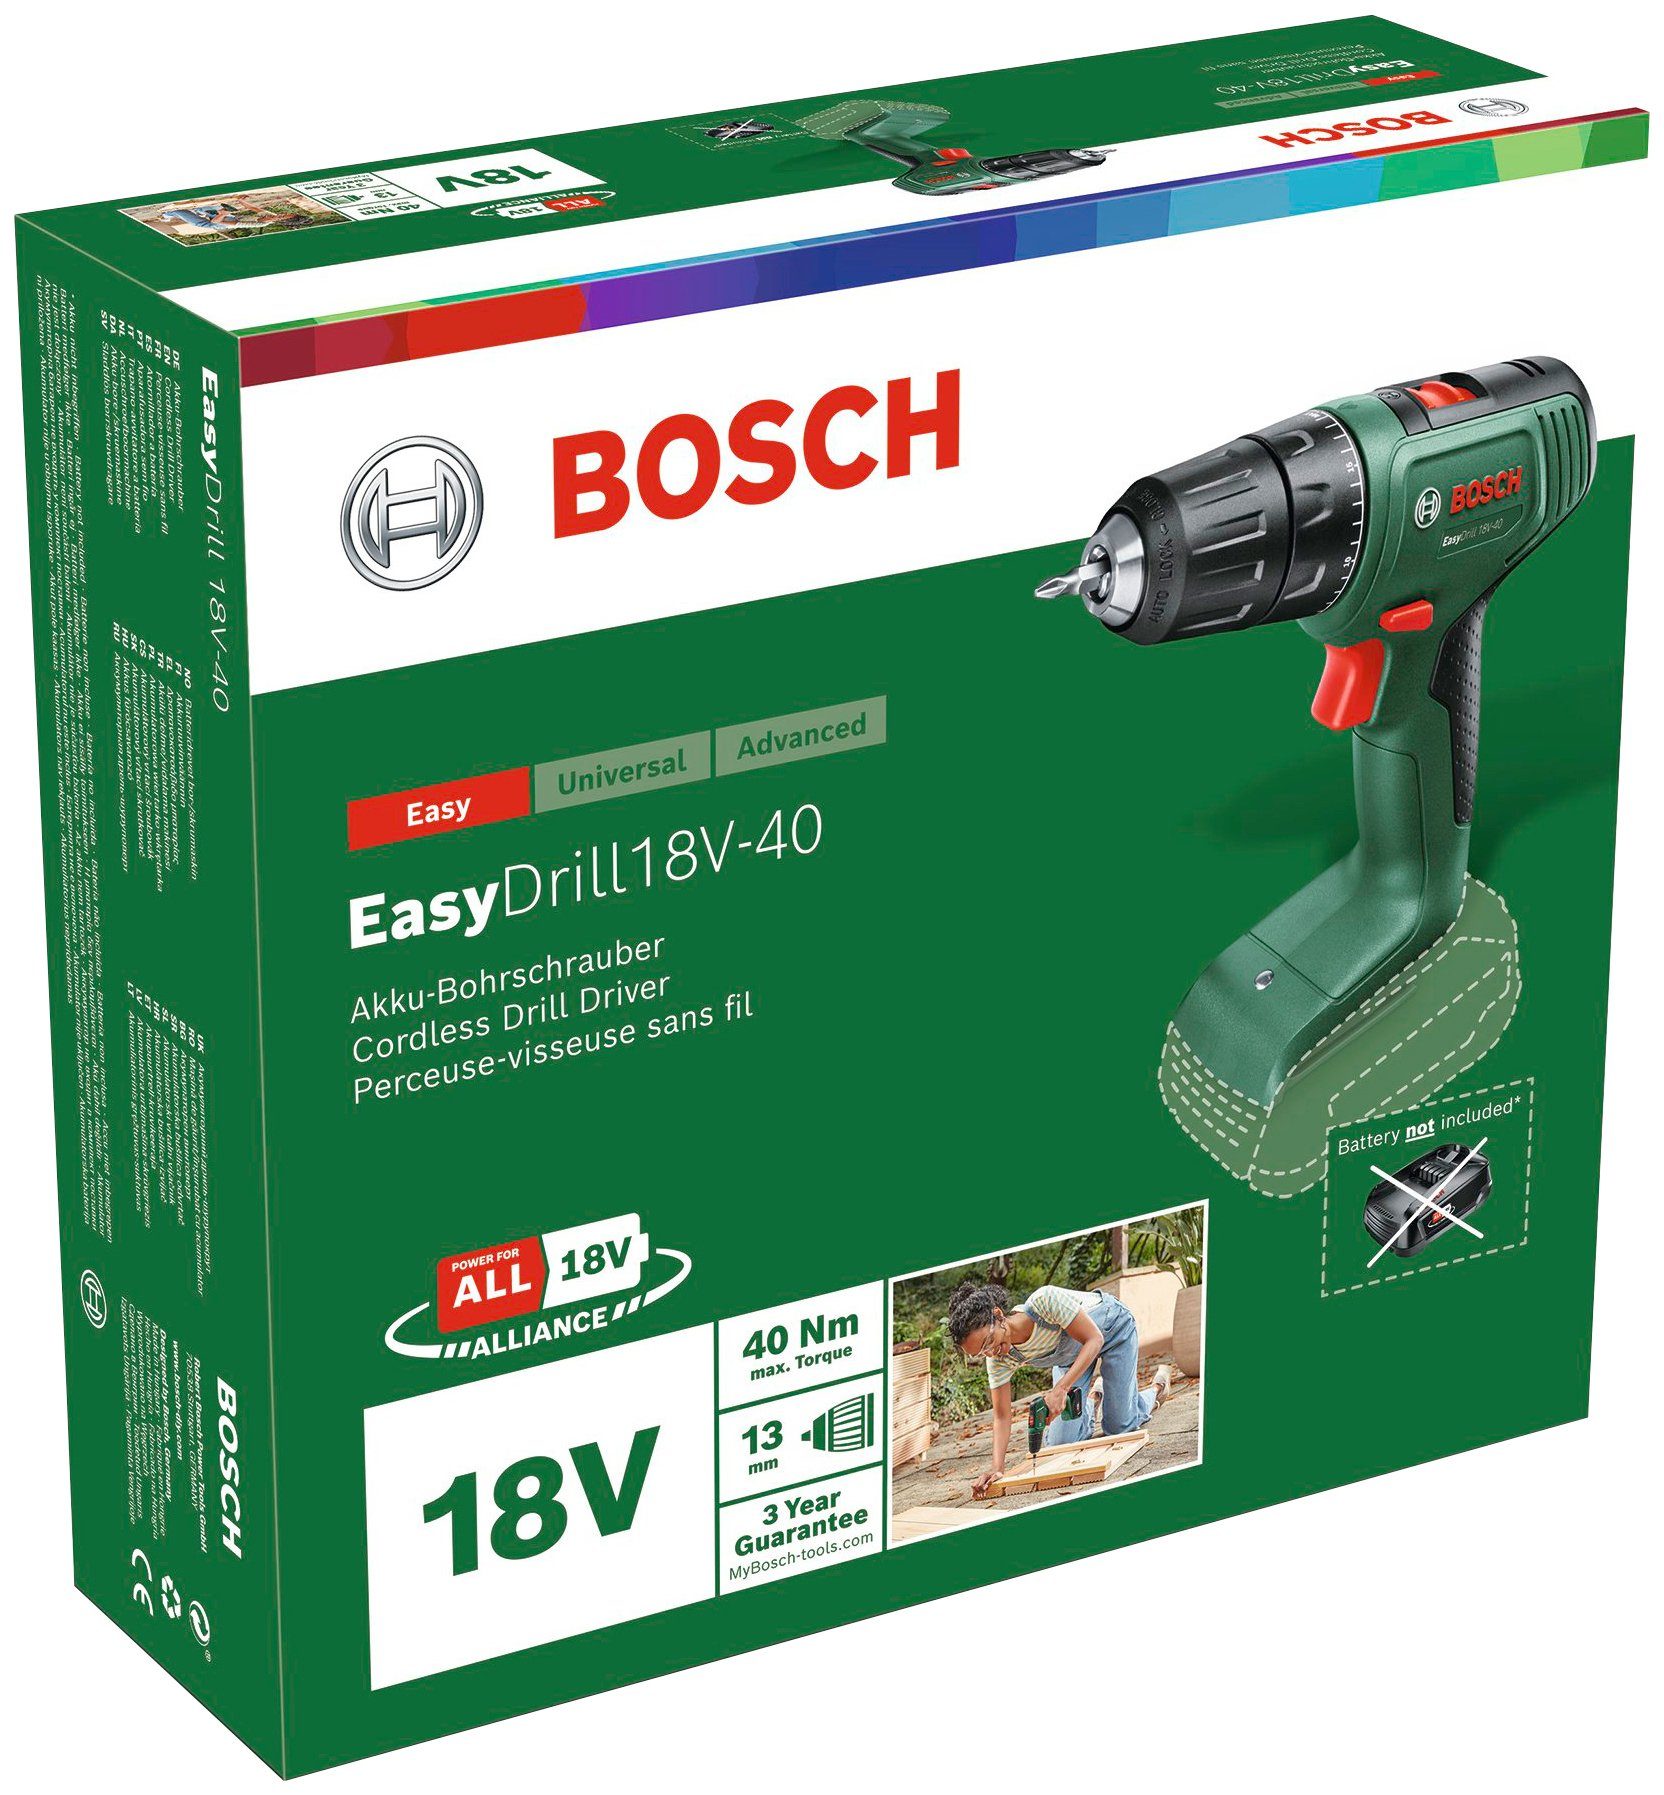 Easydrill & Bosch Volt Home Akku-Bohrschrauber Akku ohne und 18 System Garden 18V-40, Ladegerät,